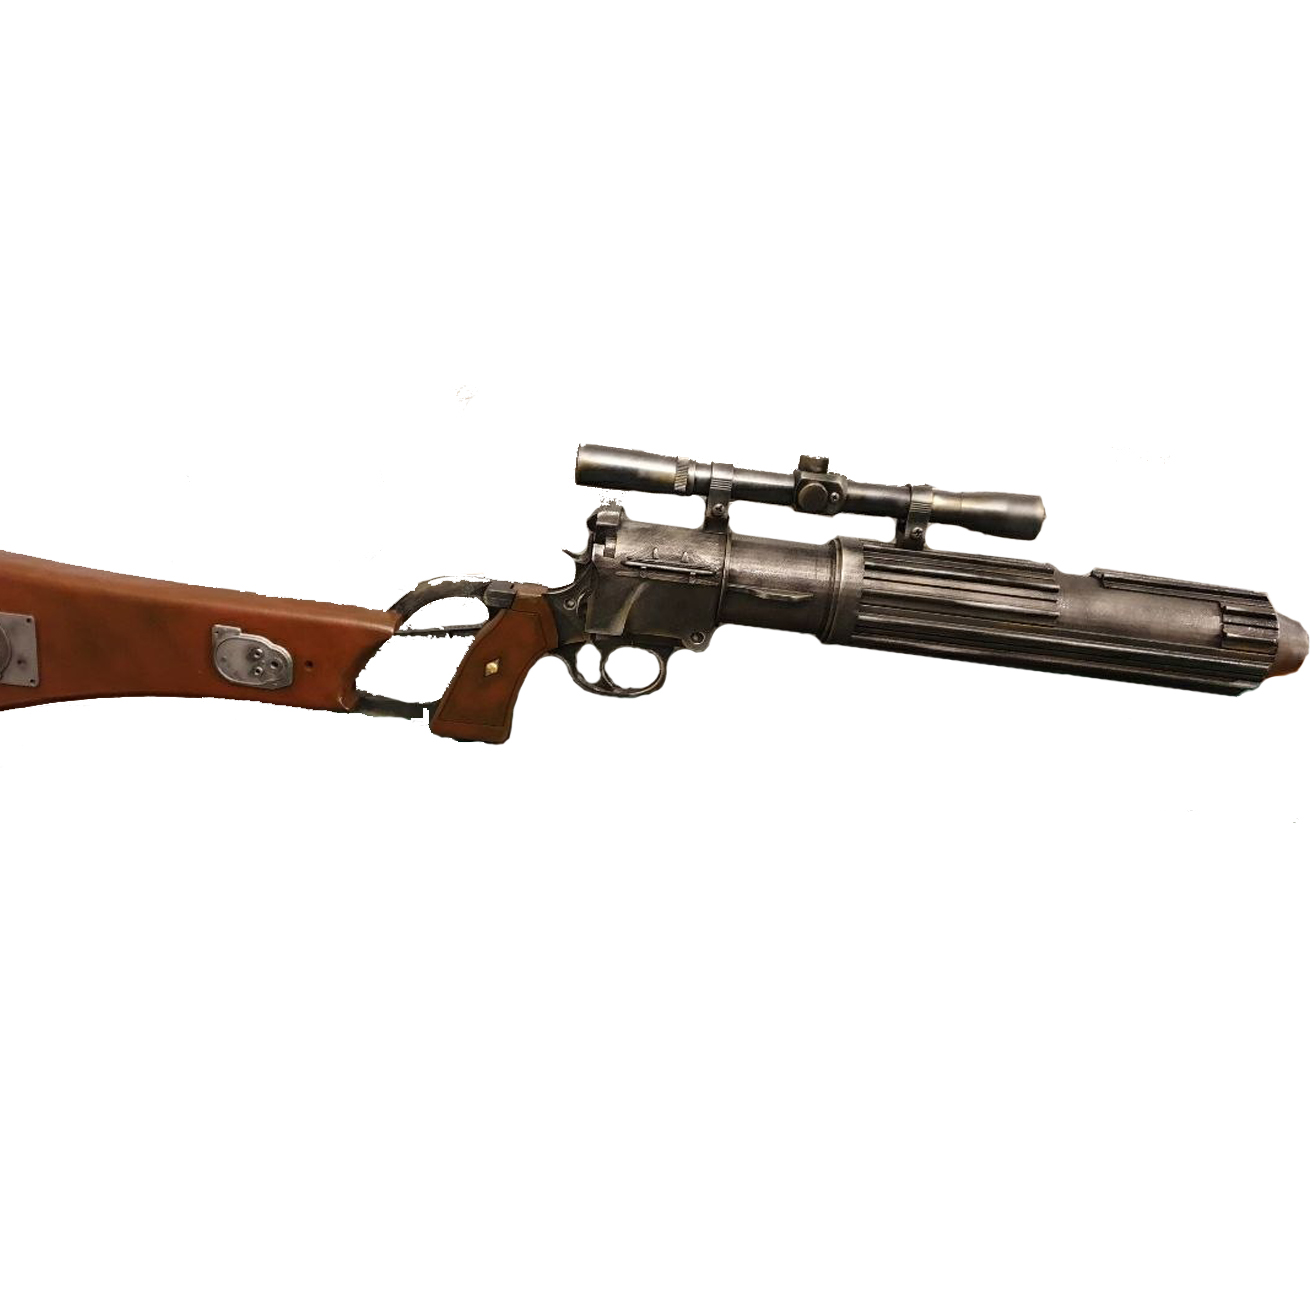 Boba Fett EE-3 carbine